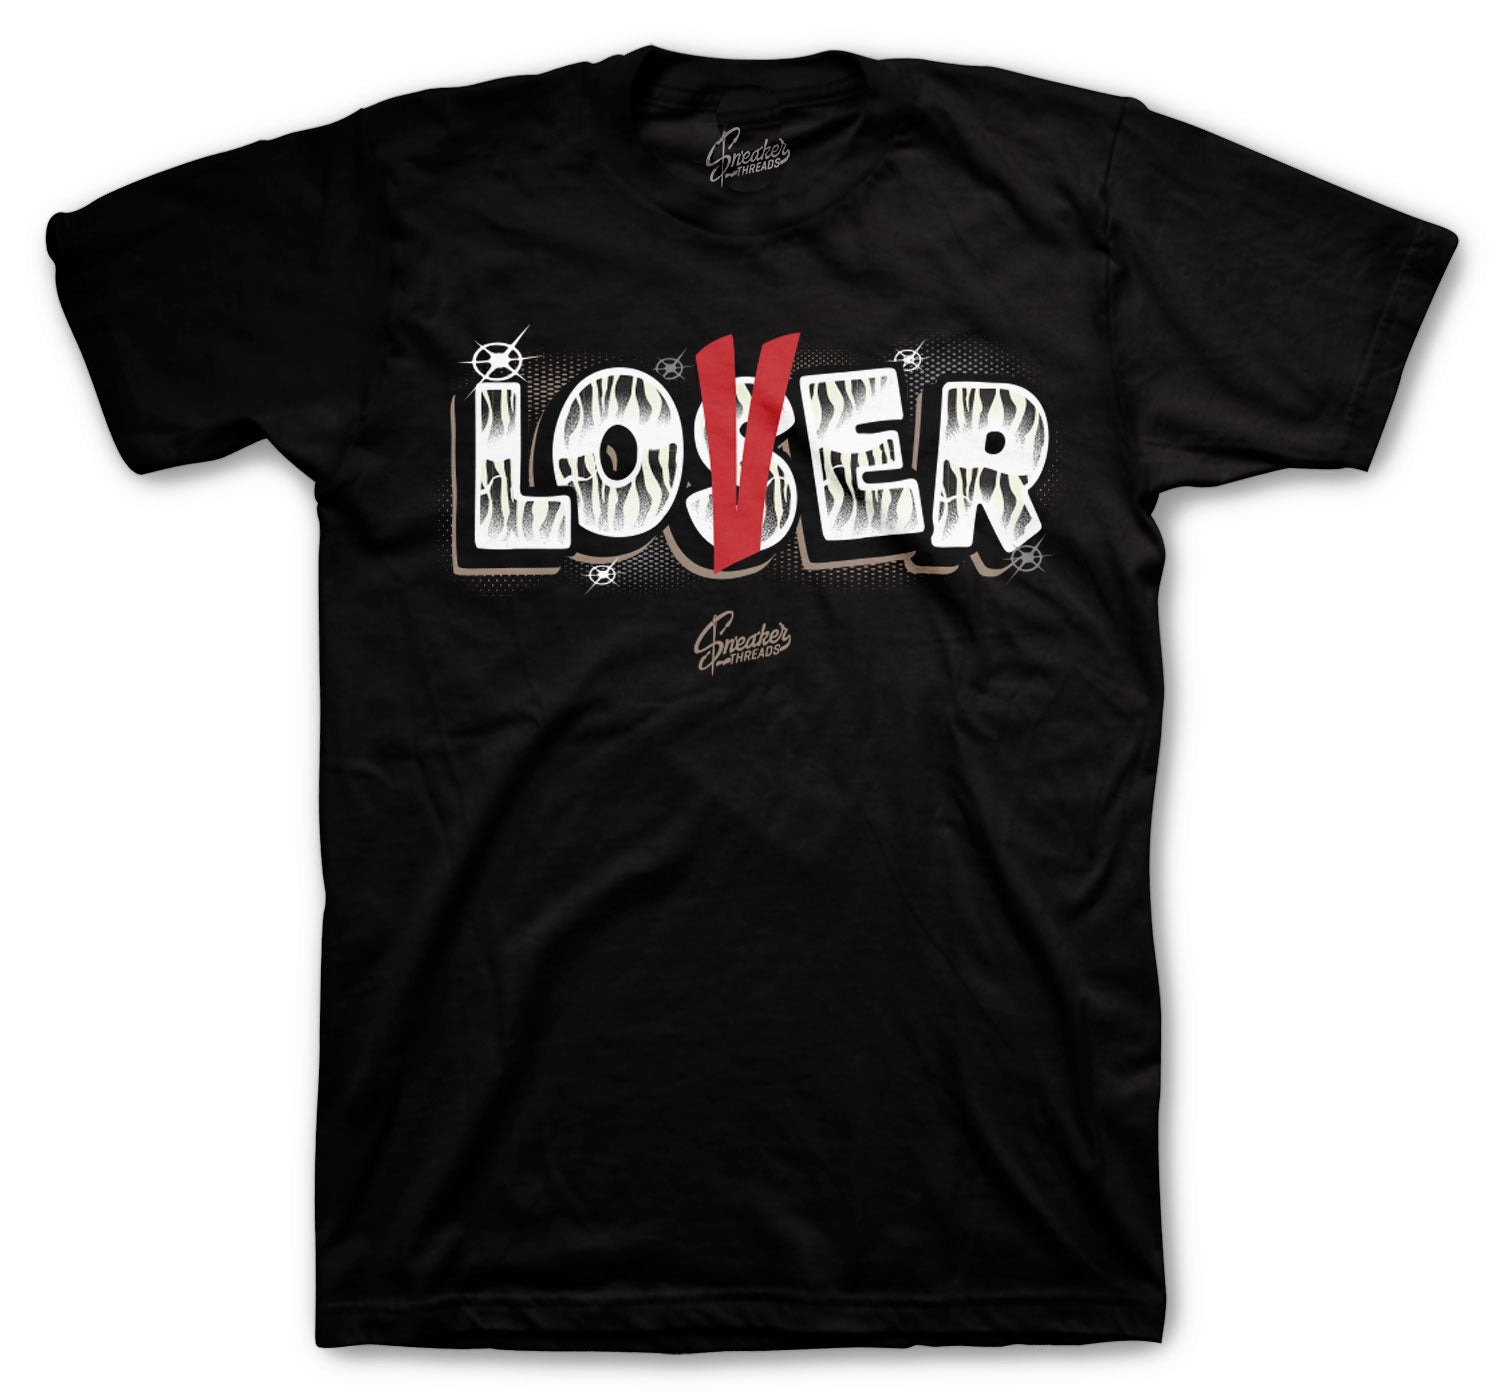 Retro 11 Animal Instinct Shirt - Lover Loser Shirt